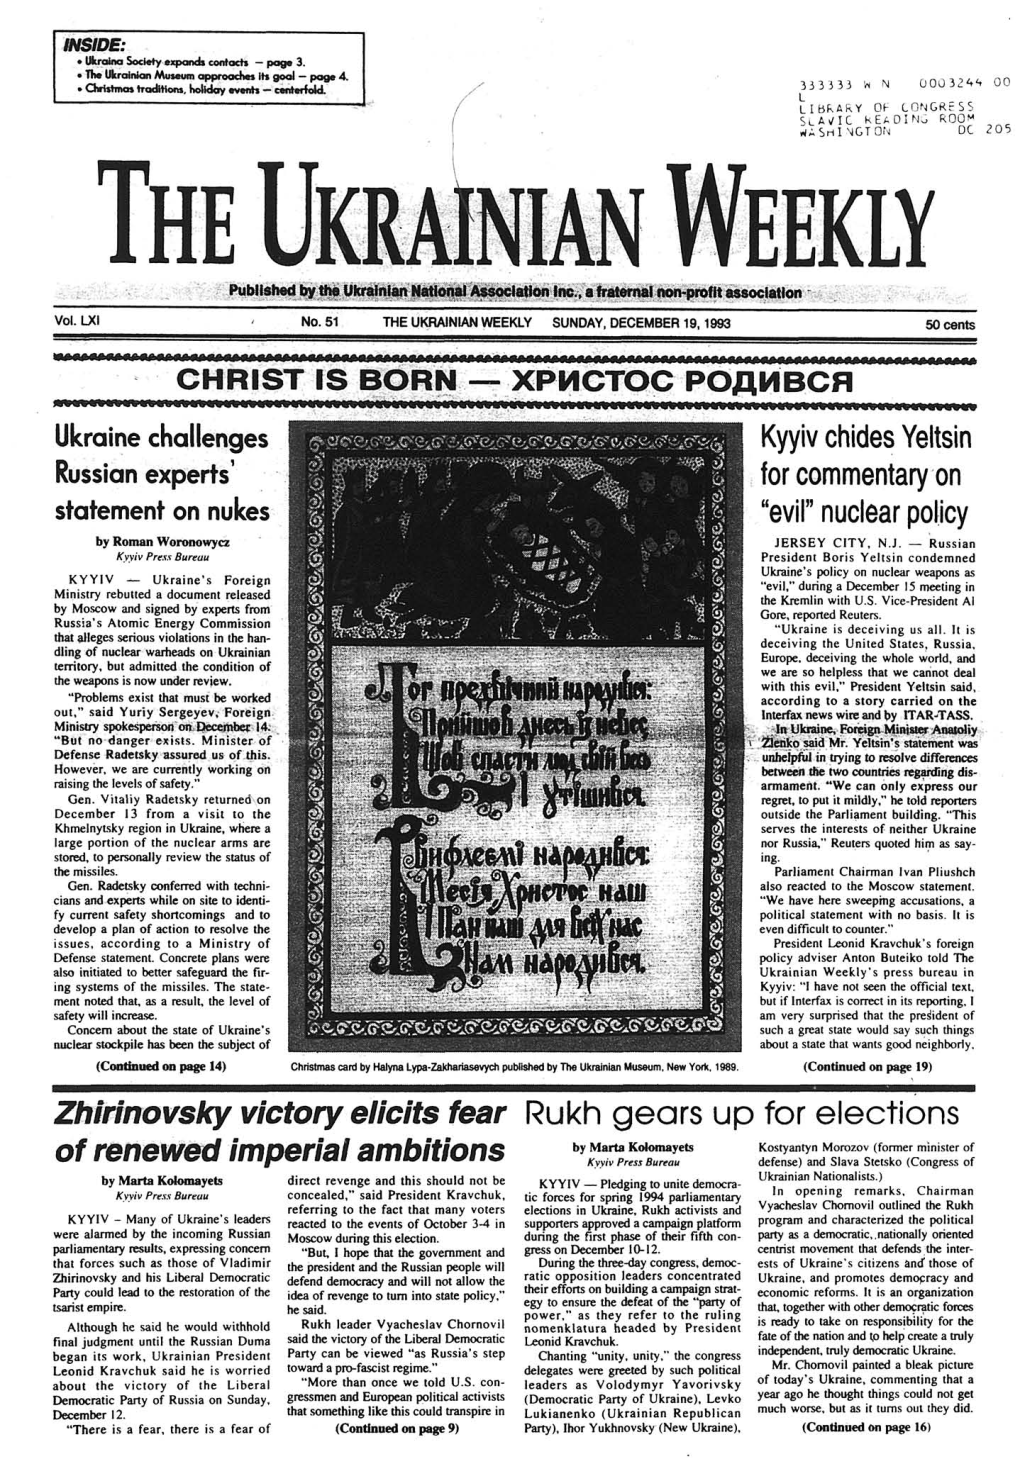 The Ukrainian Weekly 1993, No.51